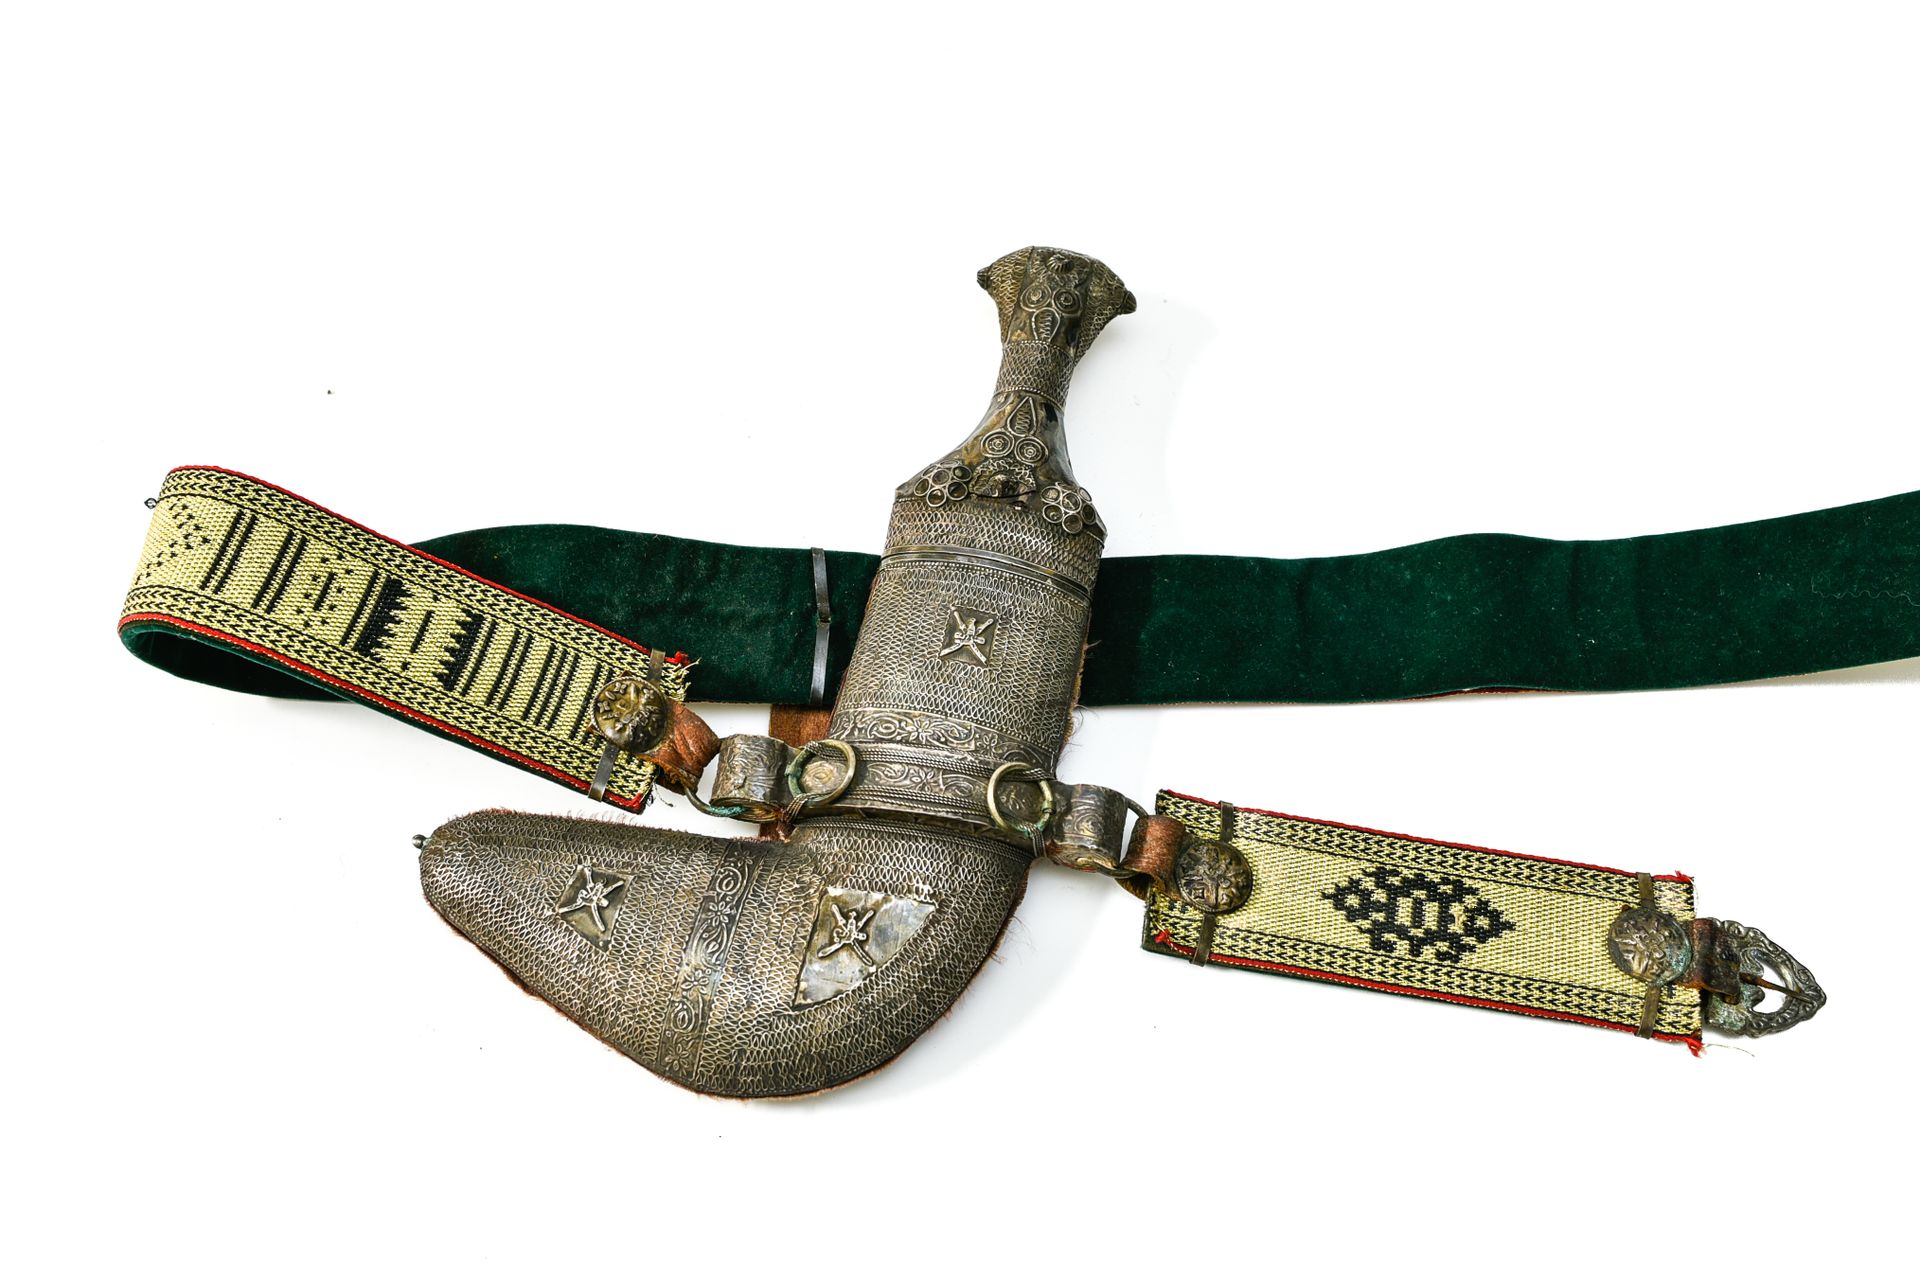 Poignard arabe SULTANATE OF OMAN

Arab dagger



Jambiya-style dagger made of si&hellip;